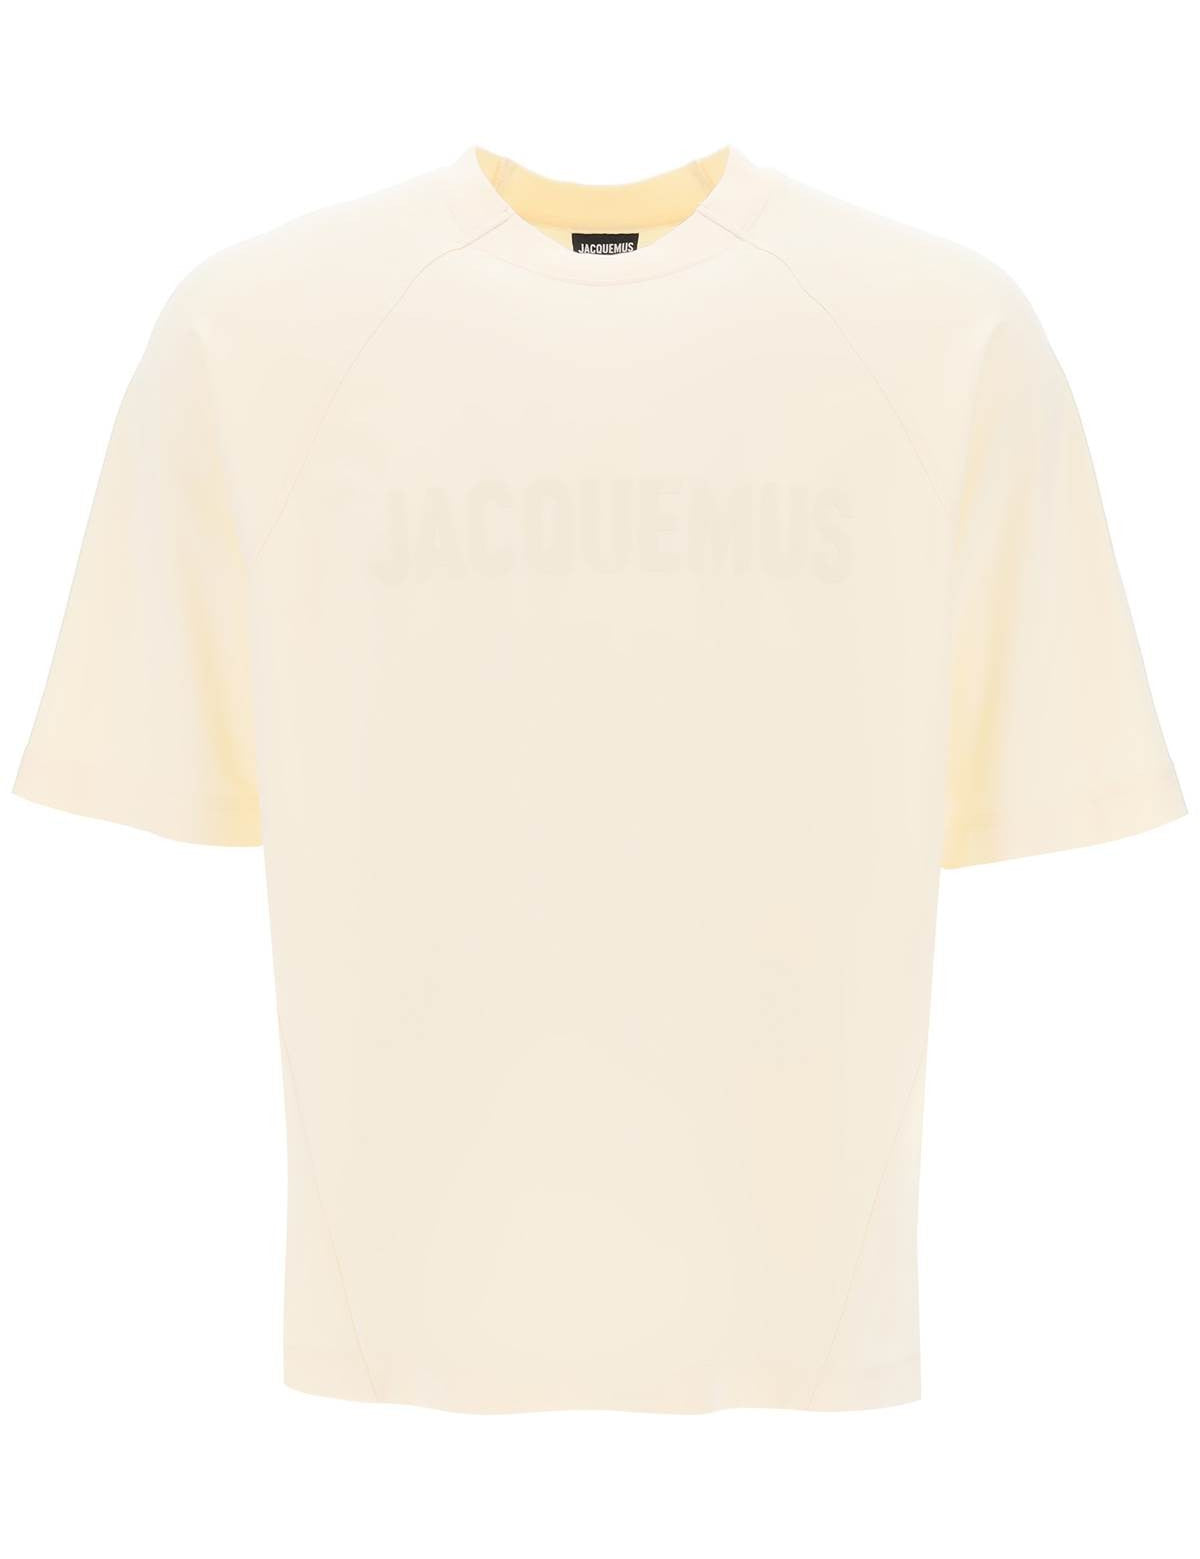 jacquemus-the-typo-t-shirt.jpg